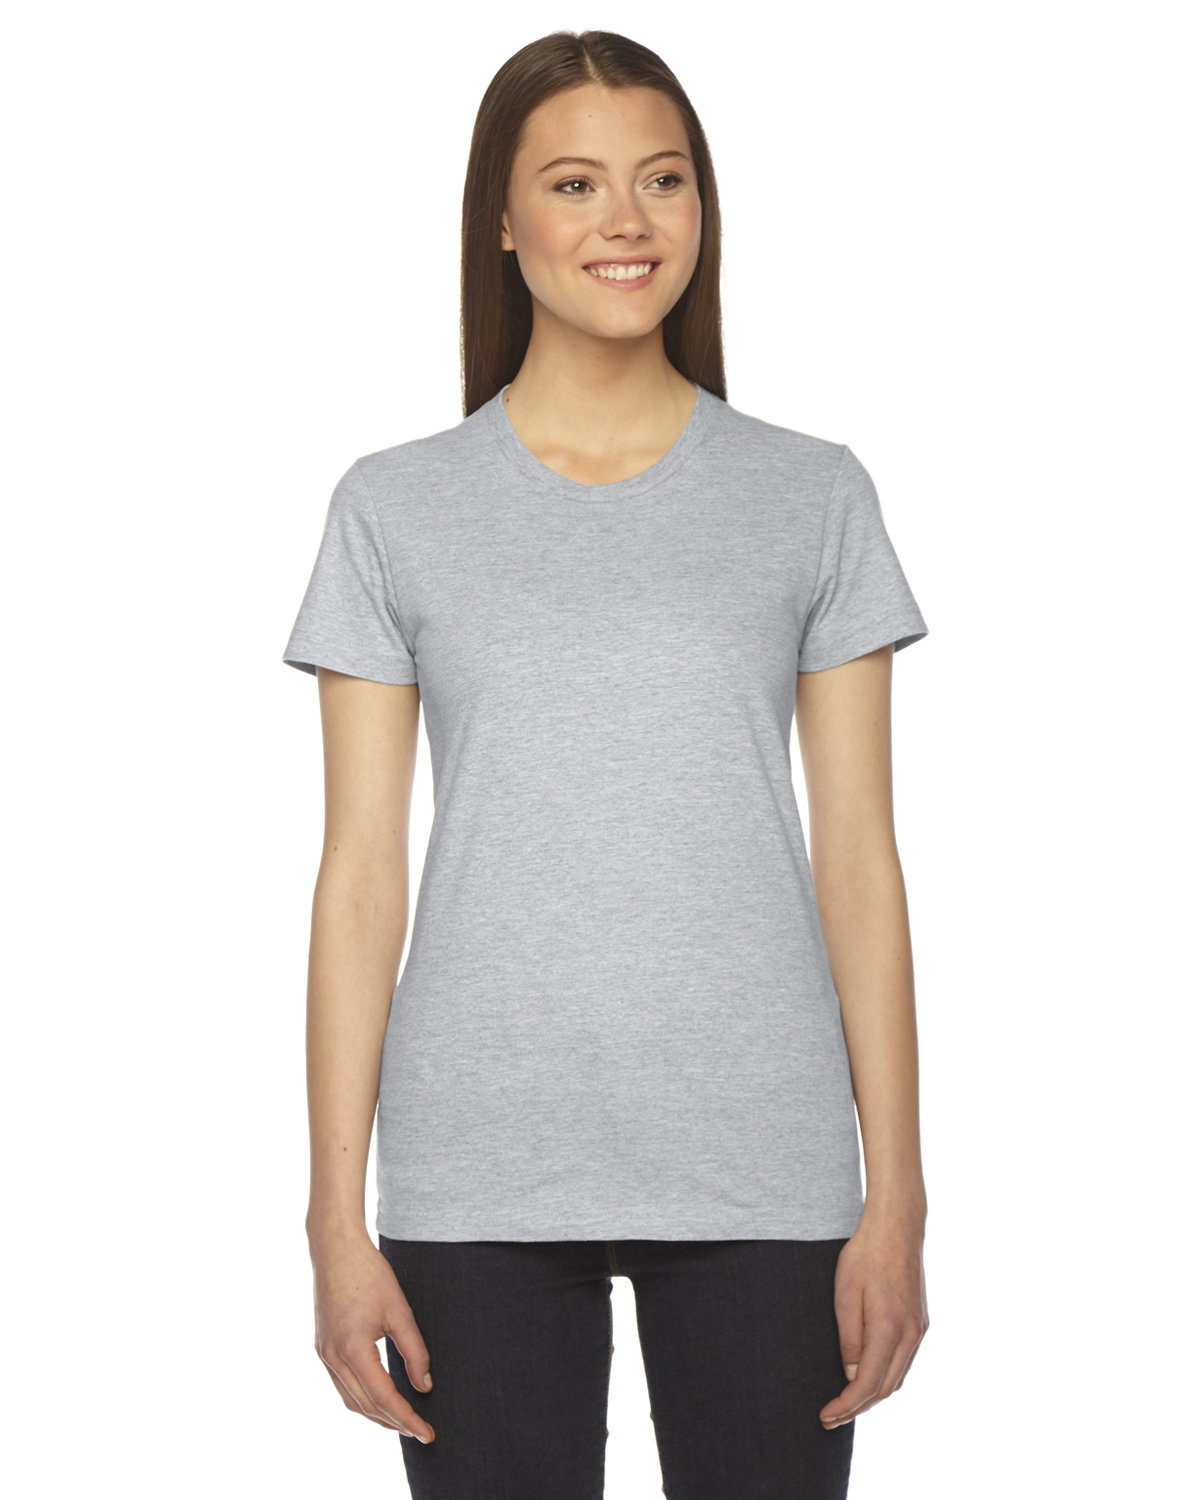 American Apparel Ladies' Fine Jersey USA Made Short-Sleeve T-Shirt heather grey 